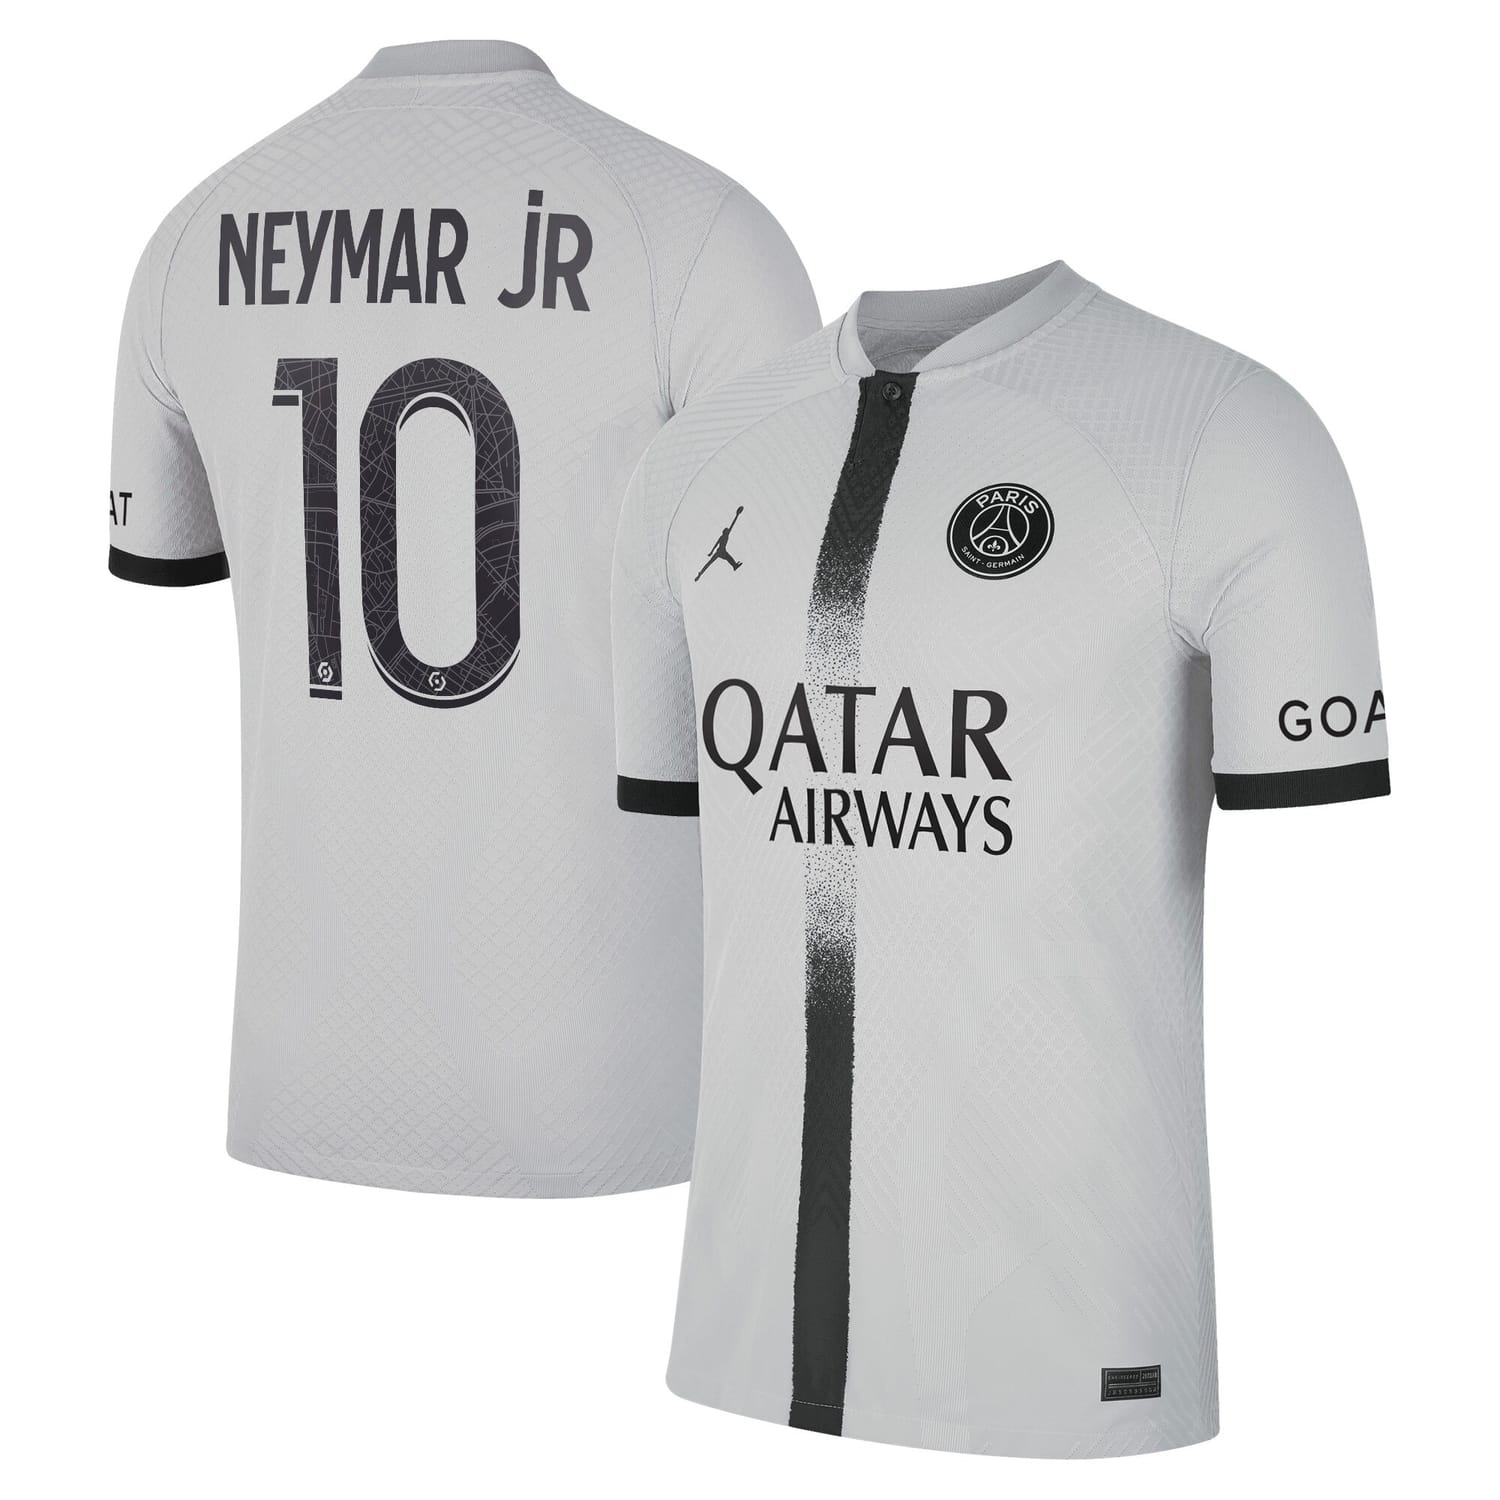 Ligue 1 Paris Saint-Germain Away Authentic Jersey Shirt 2022-23 player Neymar Jr. 10 printing for Men